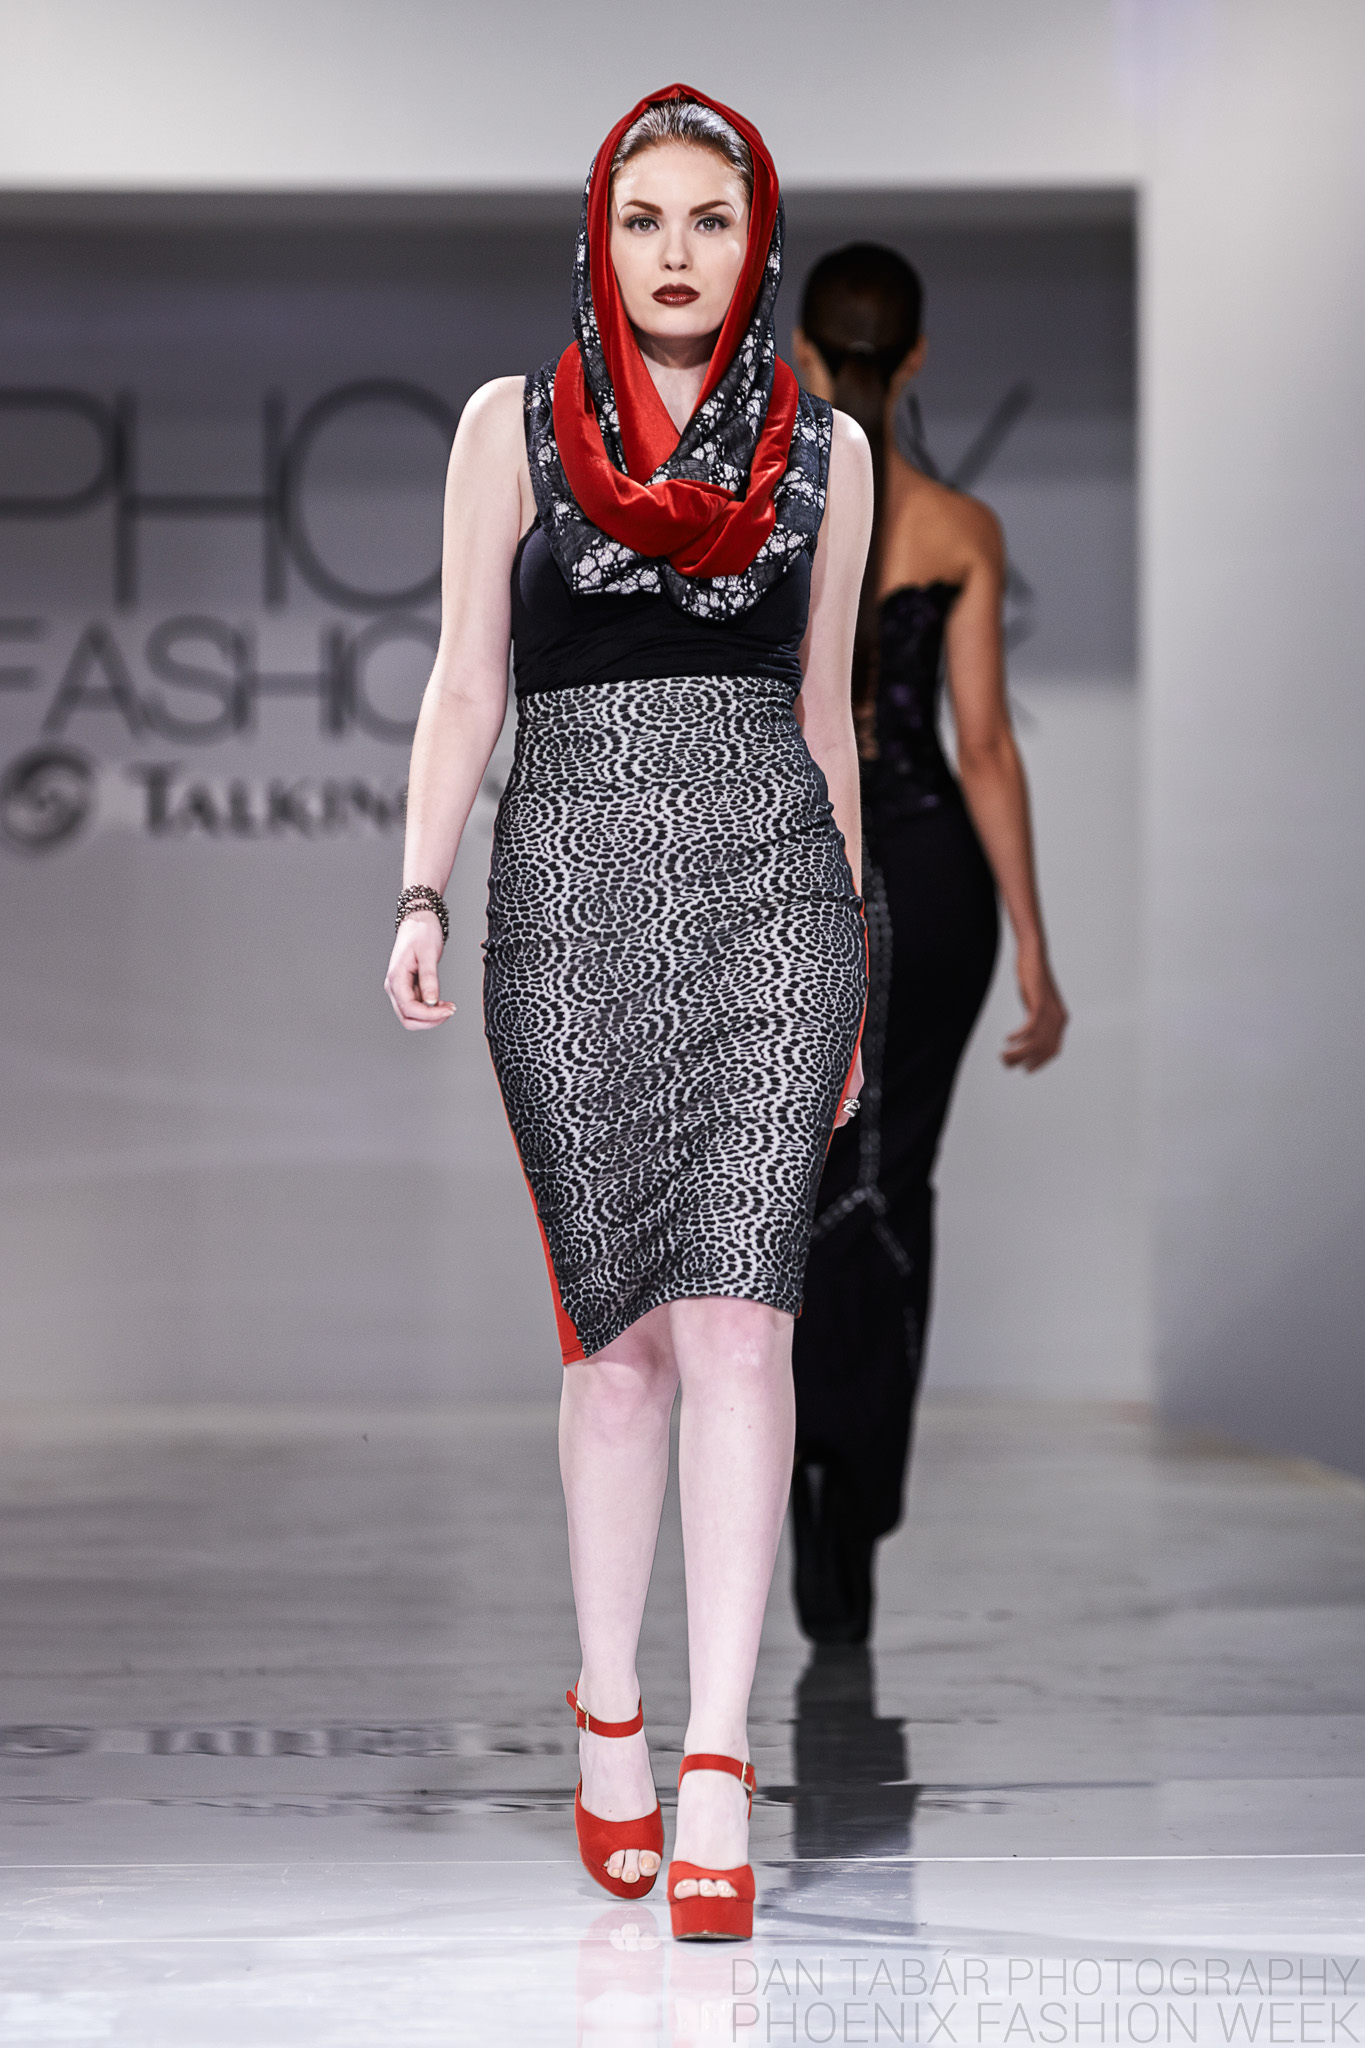 Phoenix Fashion Week 2013 highlights - a fashion fiend